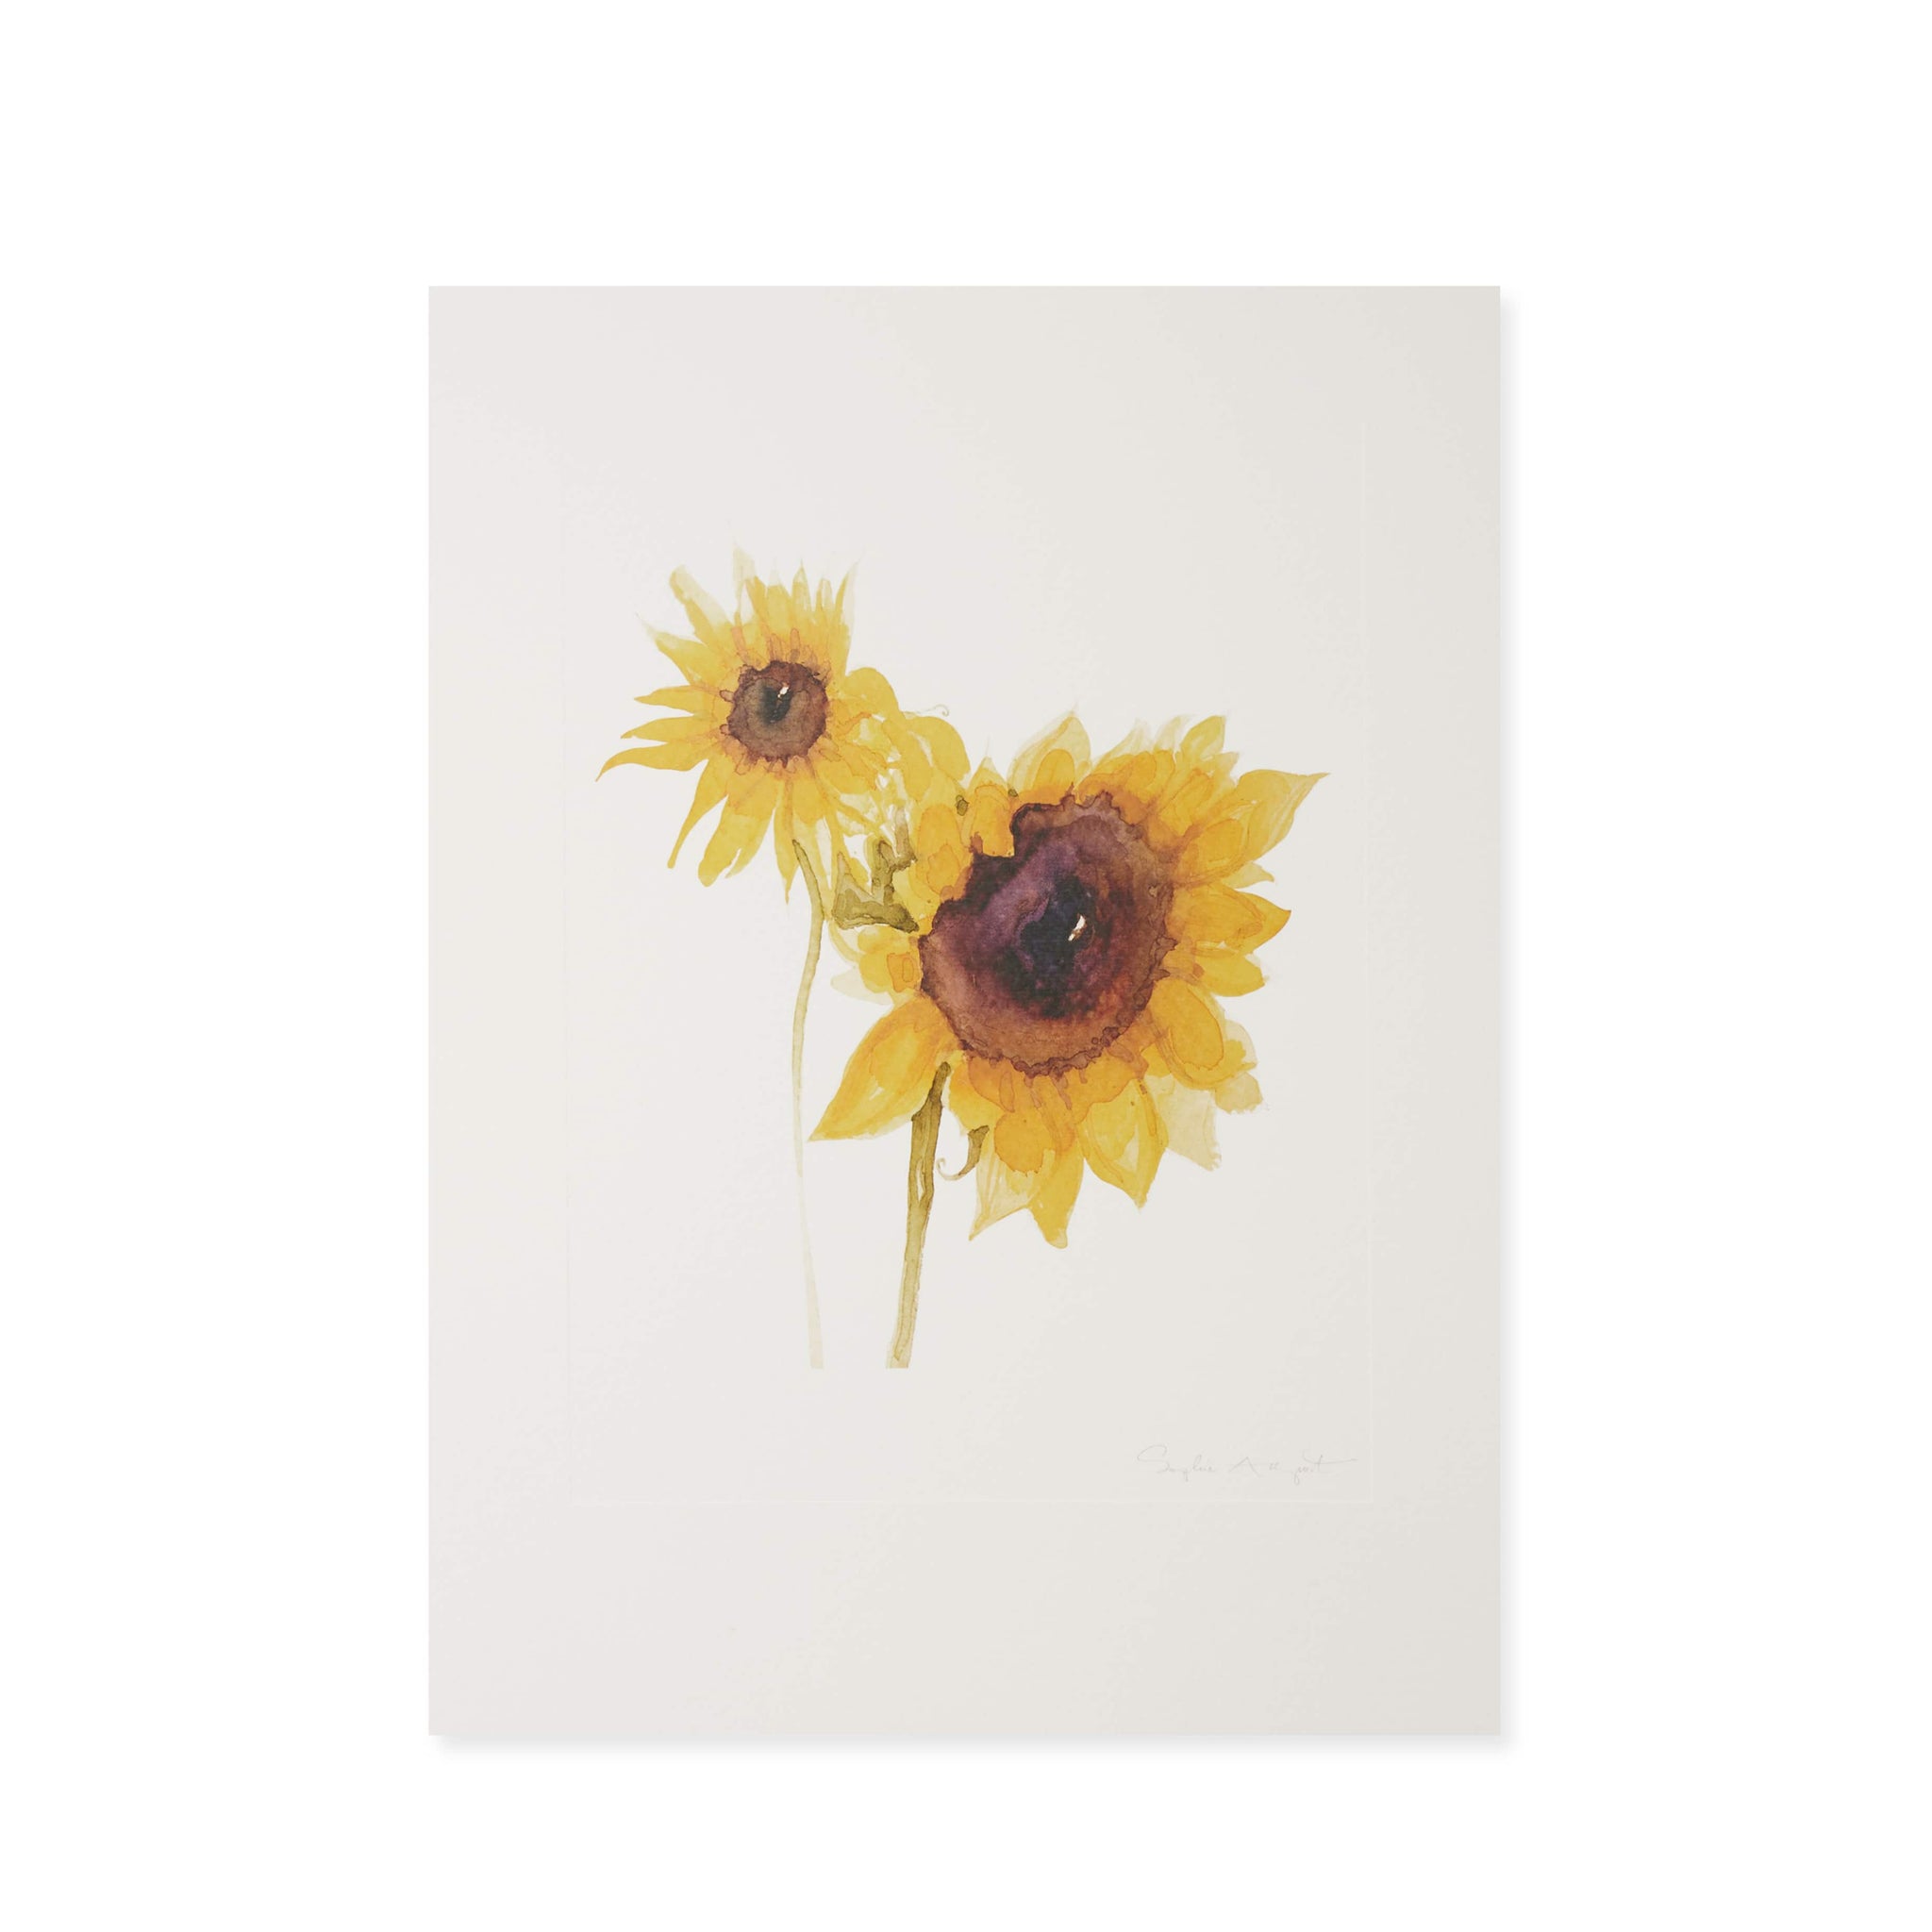 Archive Multi Sunflower Print